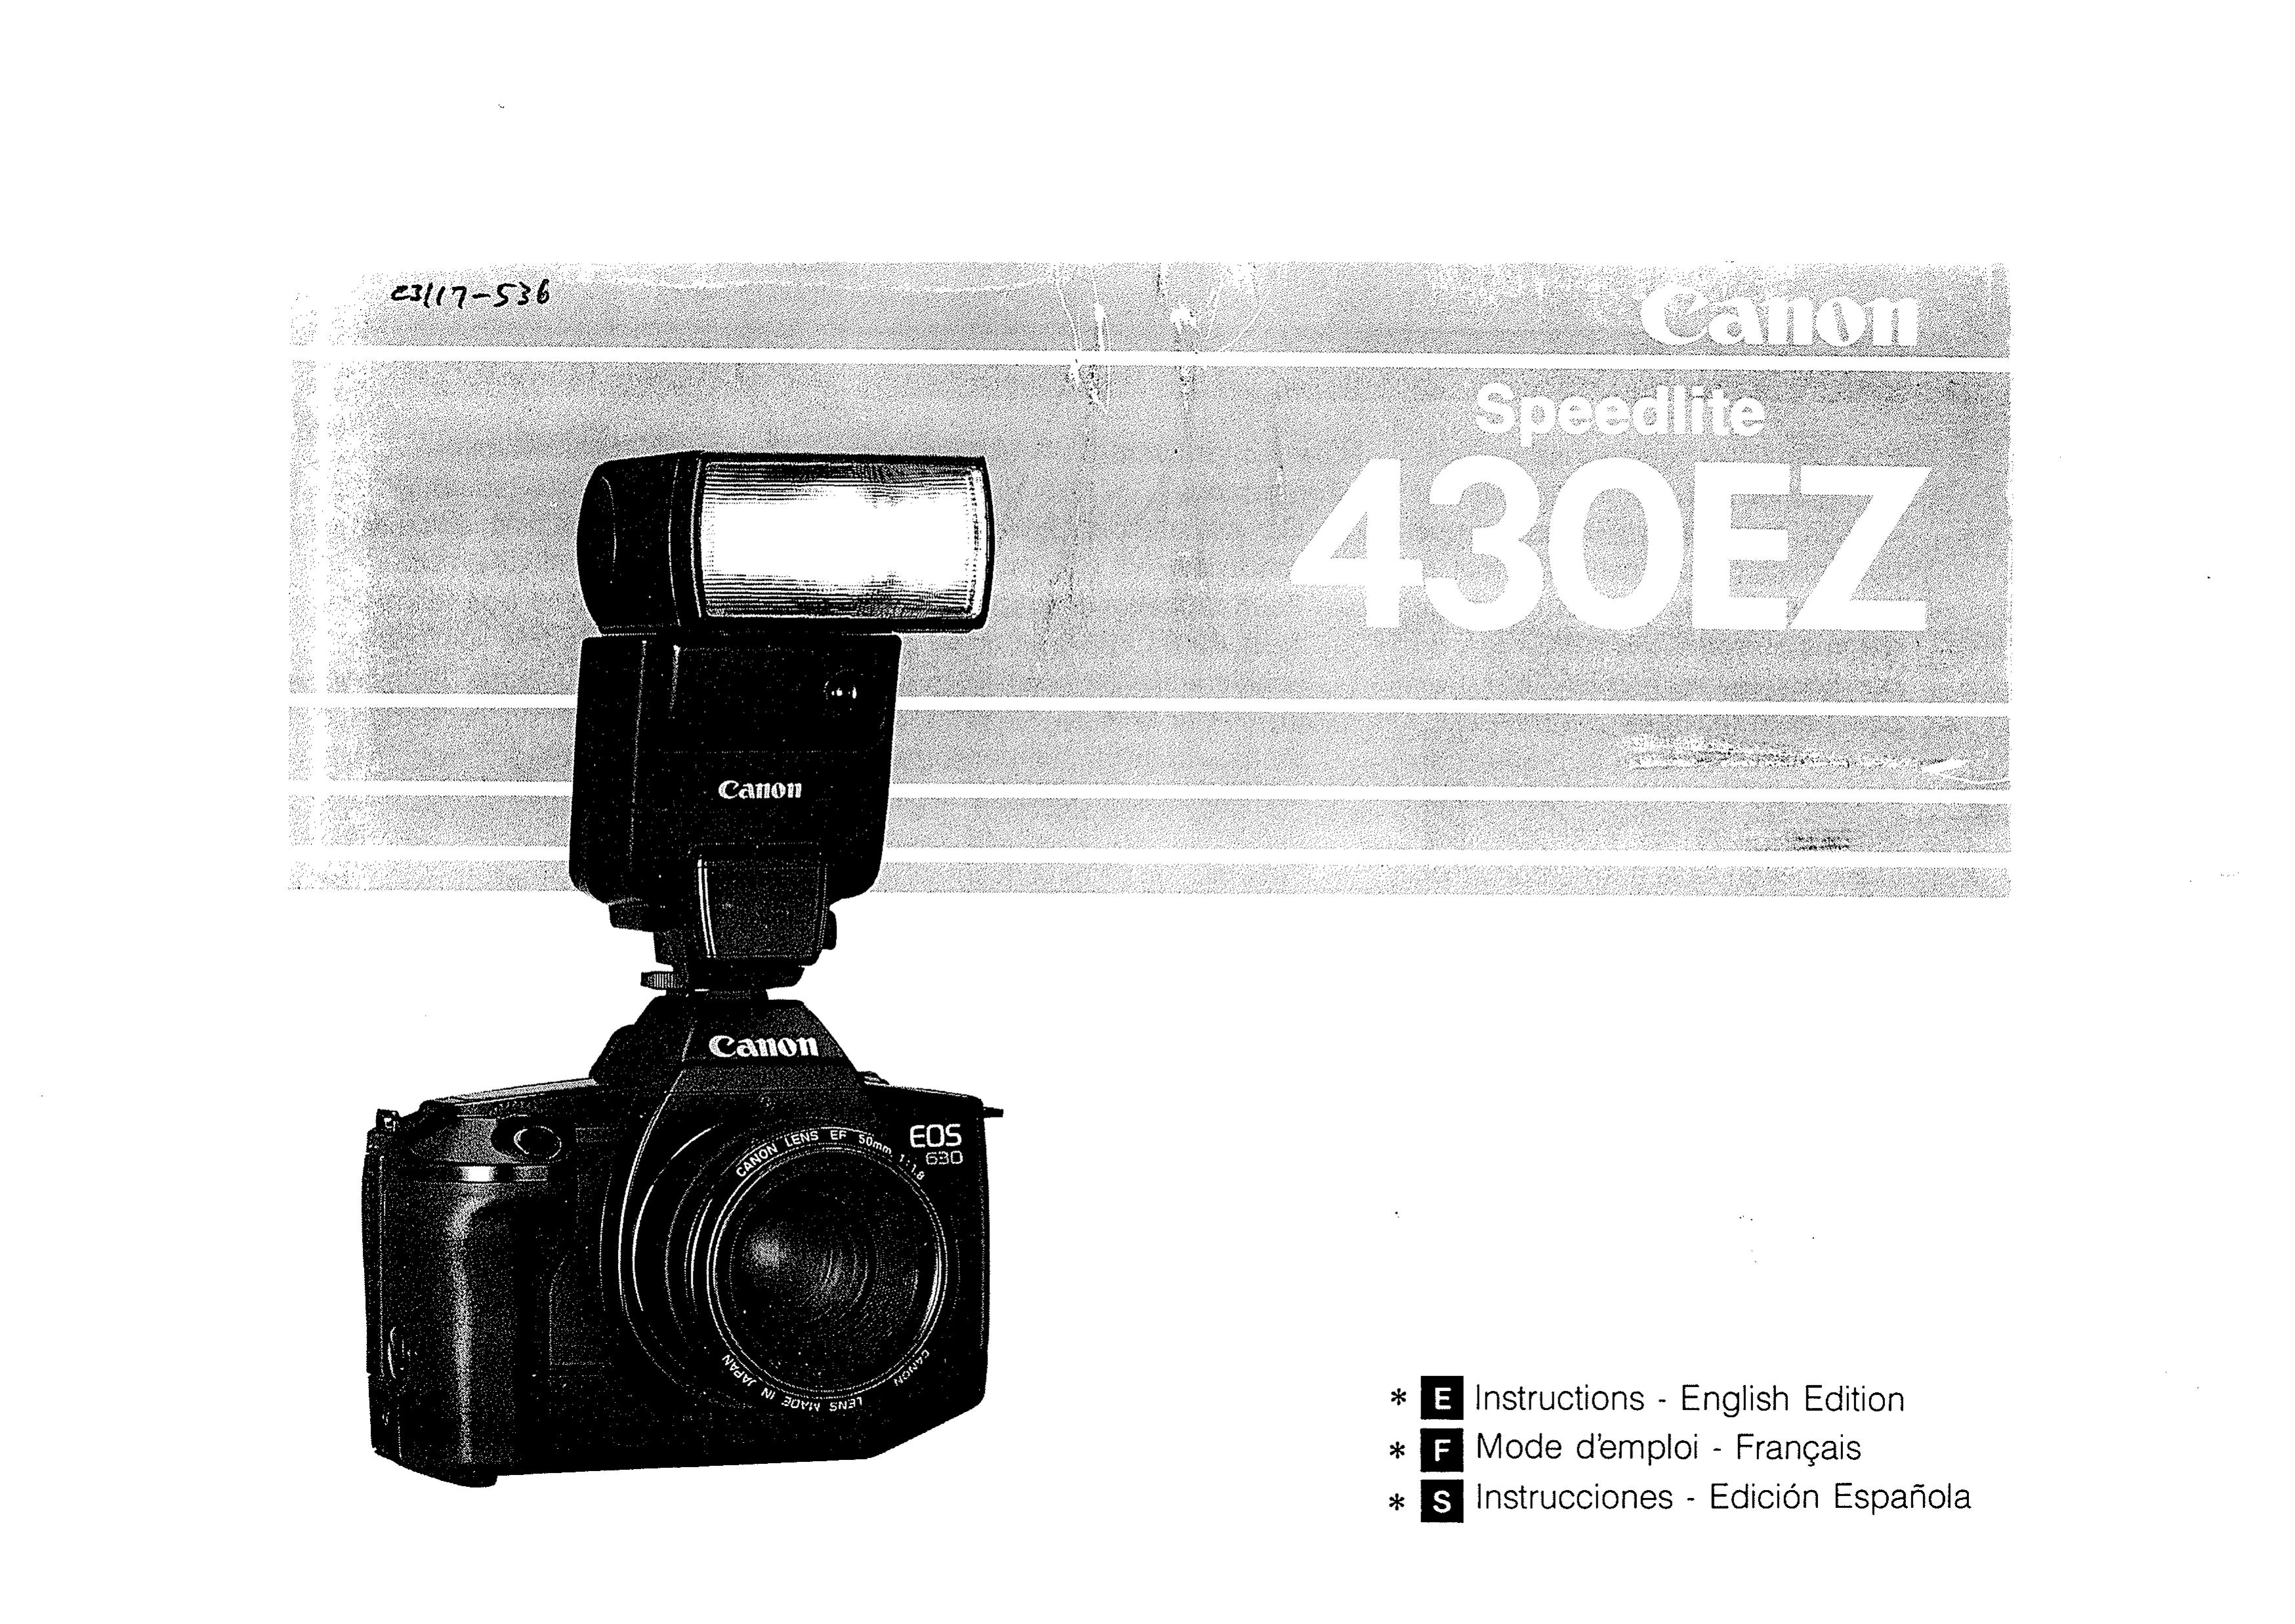 Canon 430 EZ Camera Flash User Manual